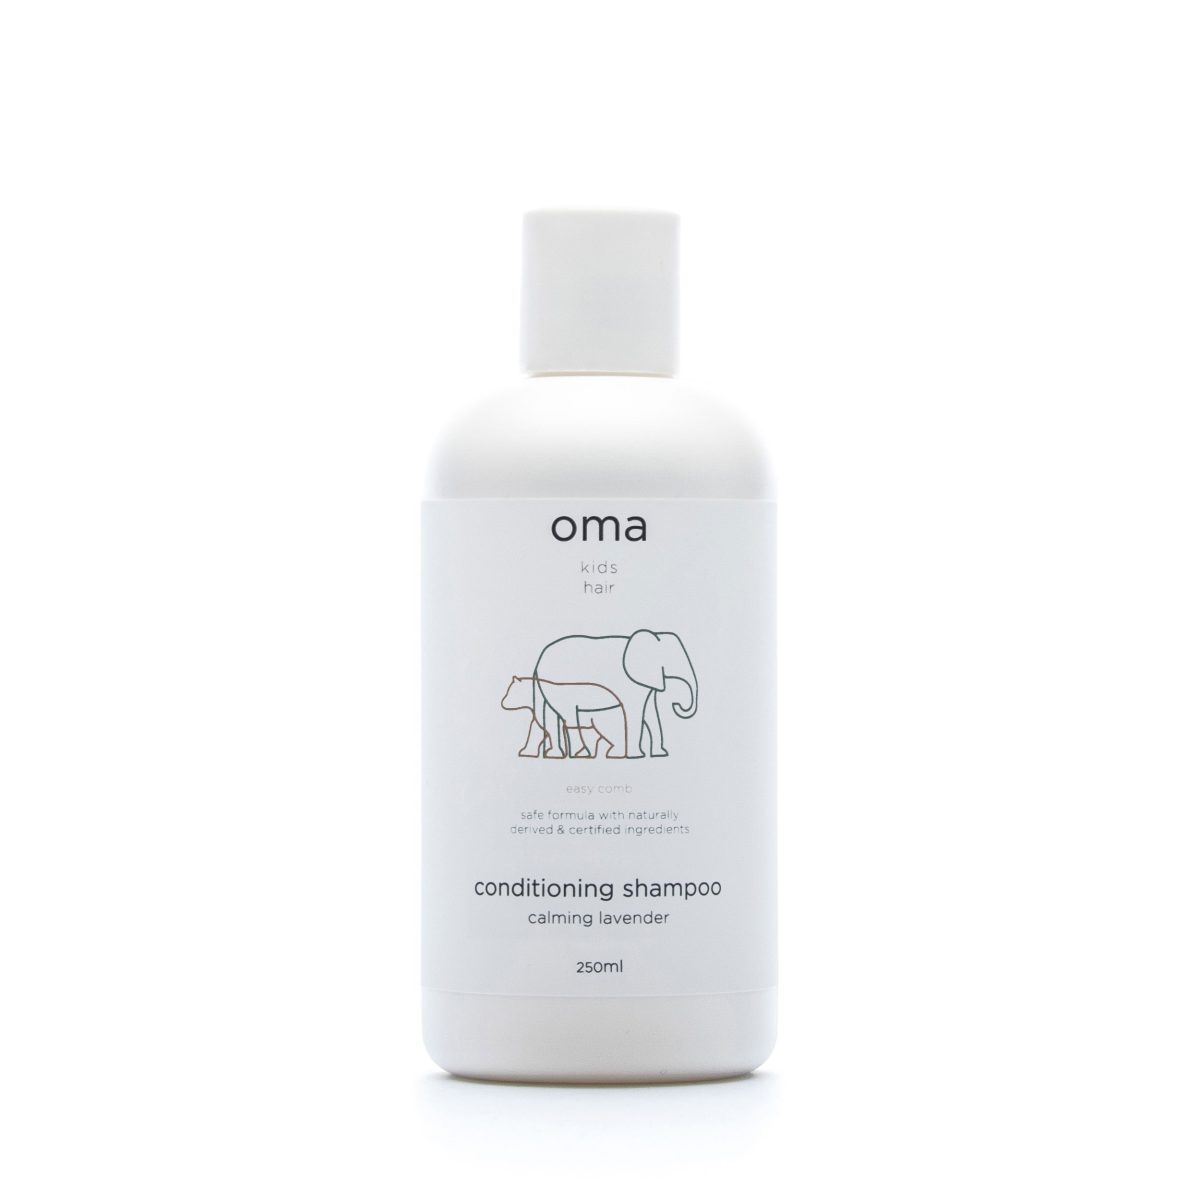 Oma Care conditioning shampoo